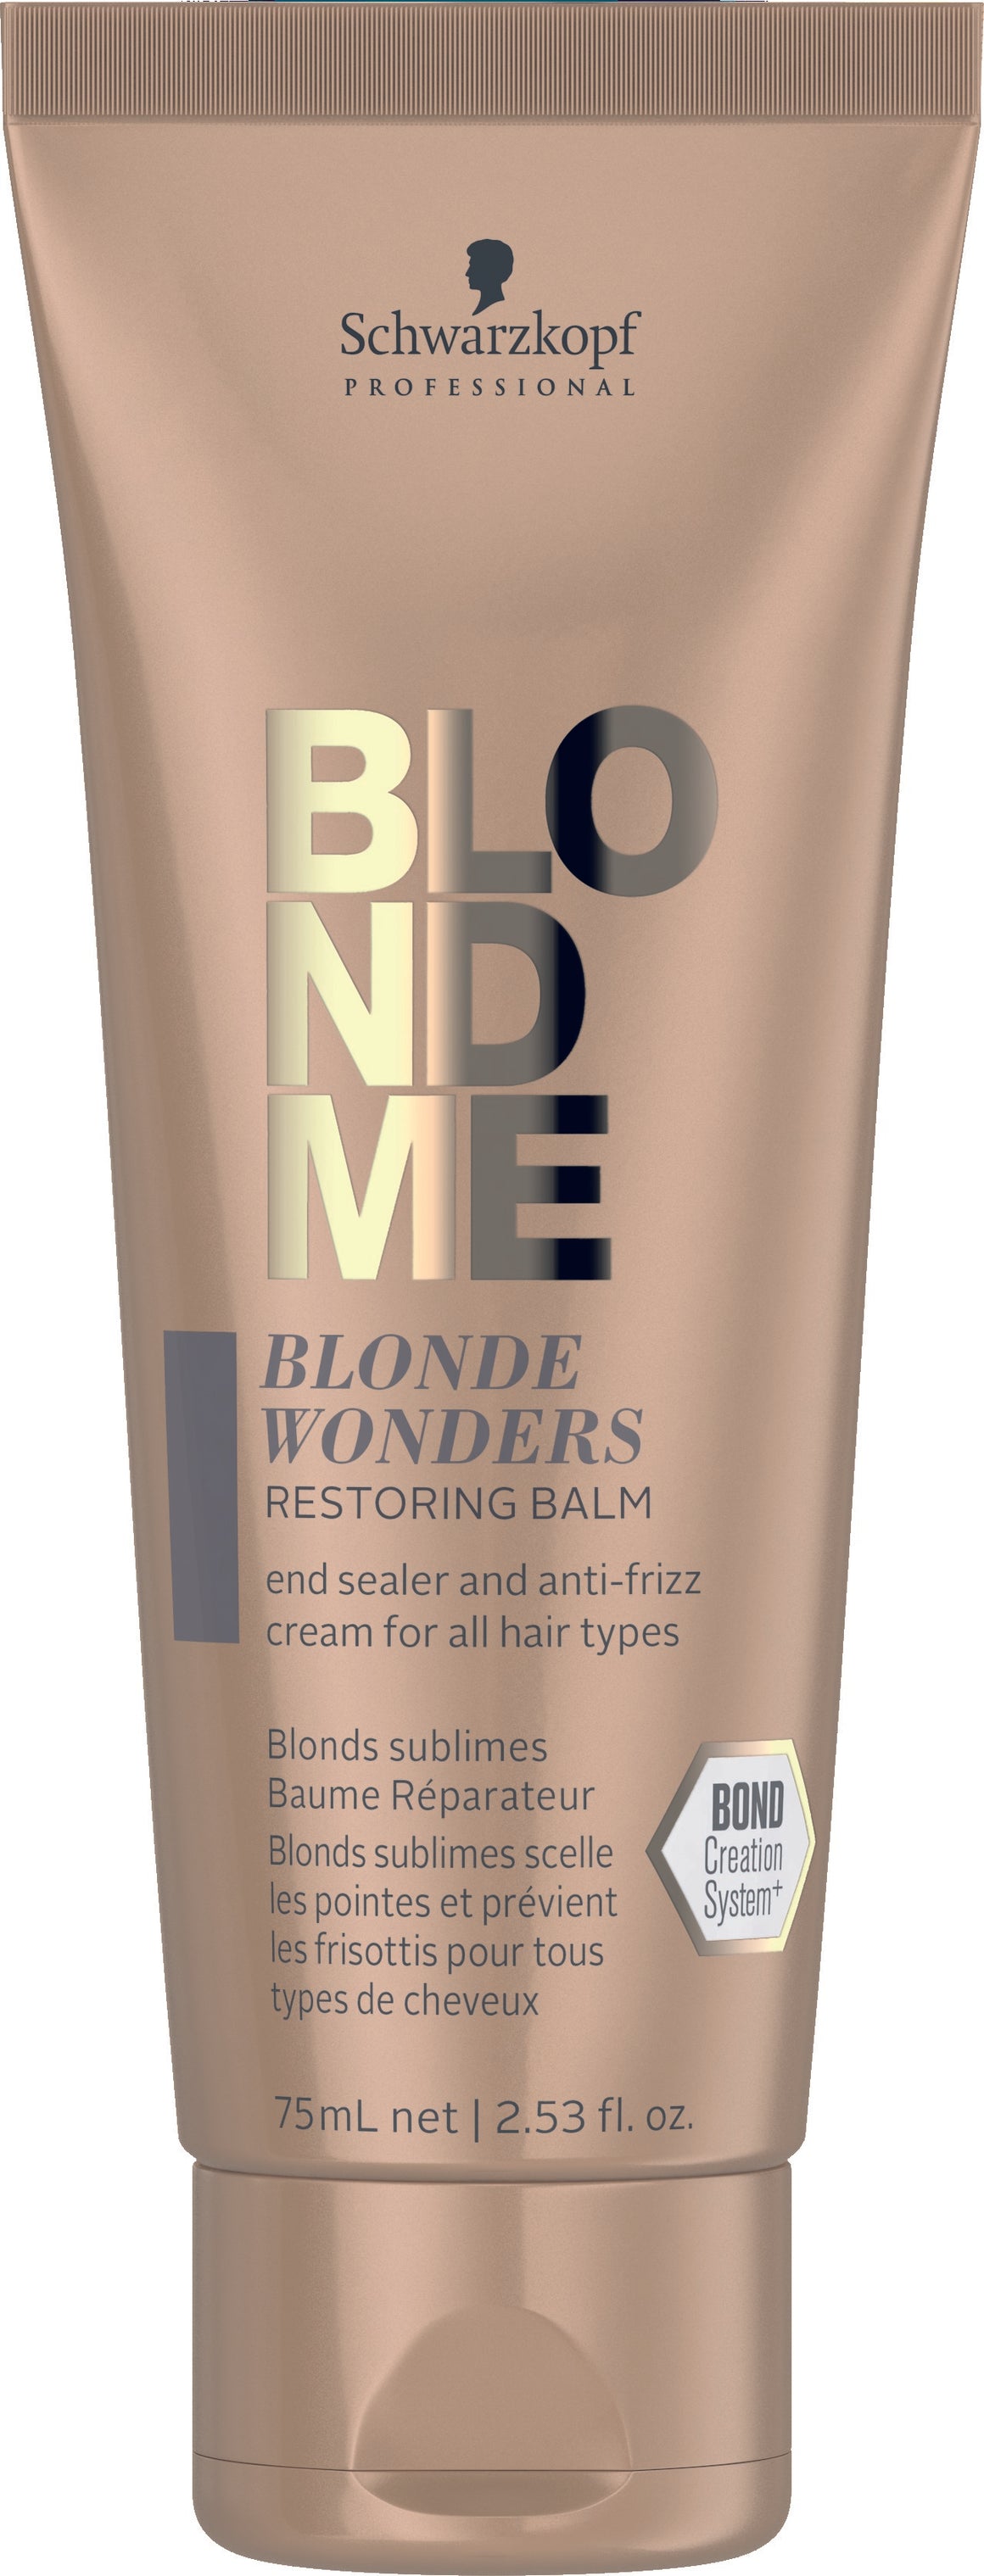 Schwarzkopf Professional BlondMe Blonde Wonders Restoring Balm 75ml at Eds Hair Bramhall